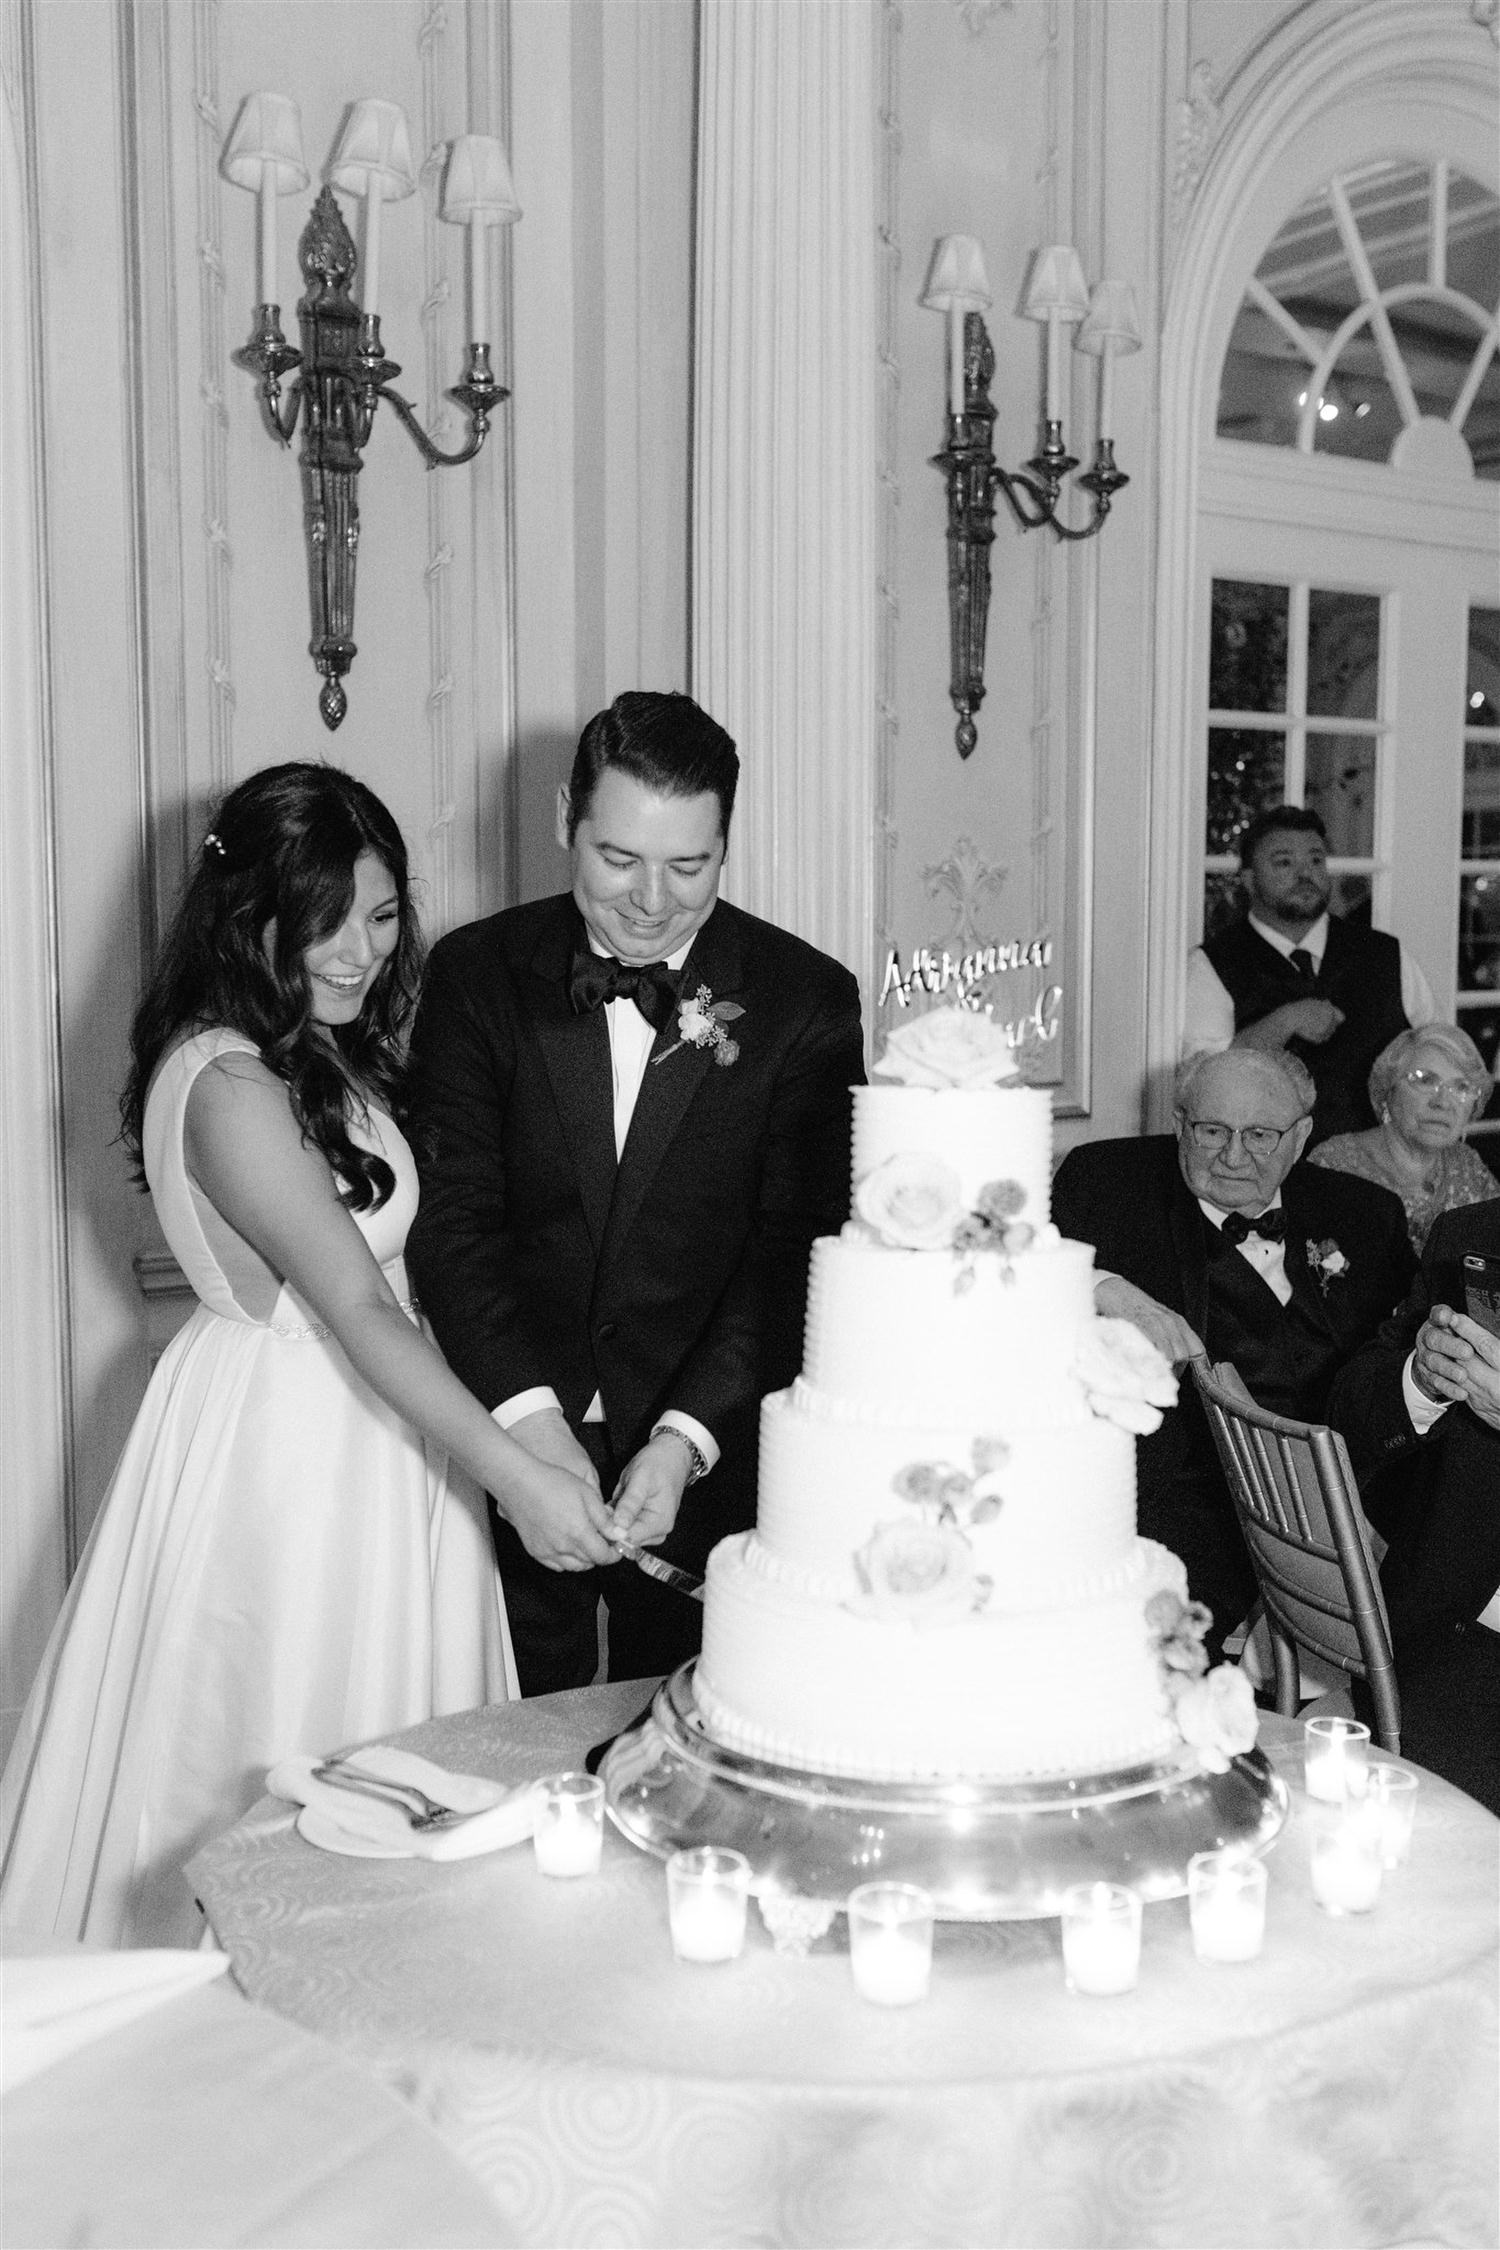 jw marriott essex house, grand salon, jenny fu studio, bride, groom, cake cutting, black and white photo